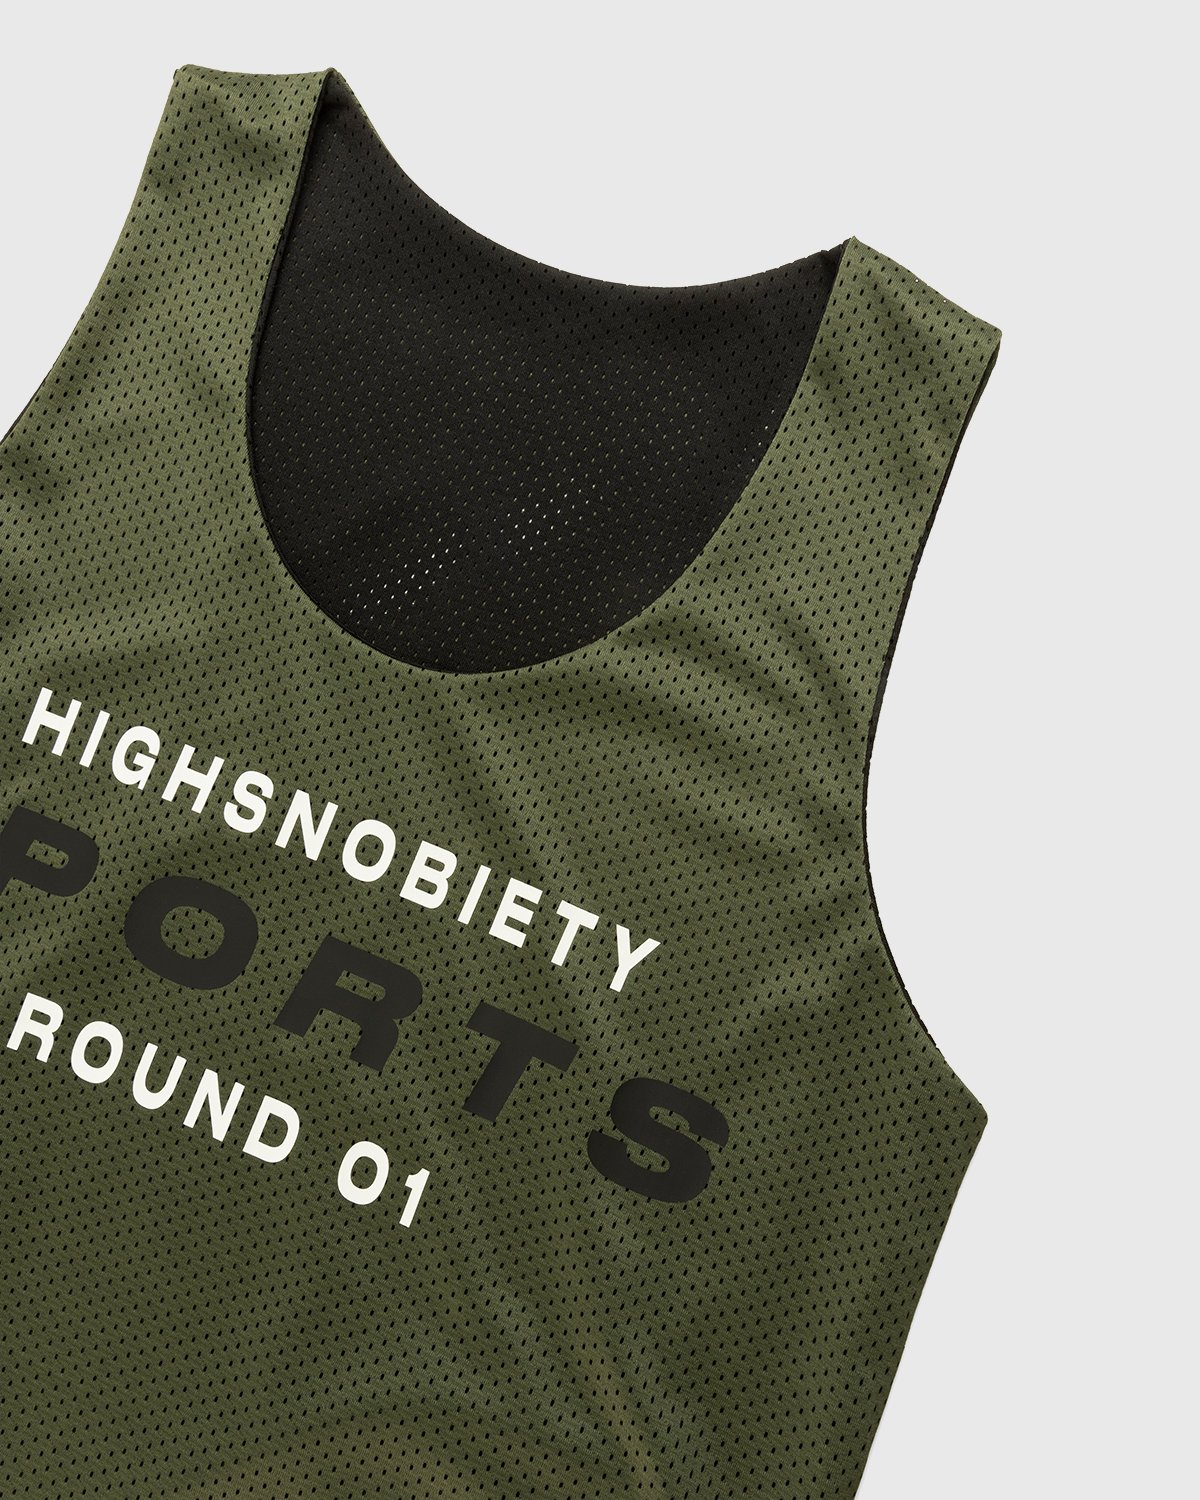 Highsnobiety - HS Sports Reversible Mesh Tank Top Black/Khaki - Clothing - Green - Image 8